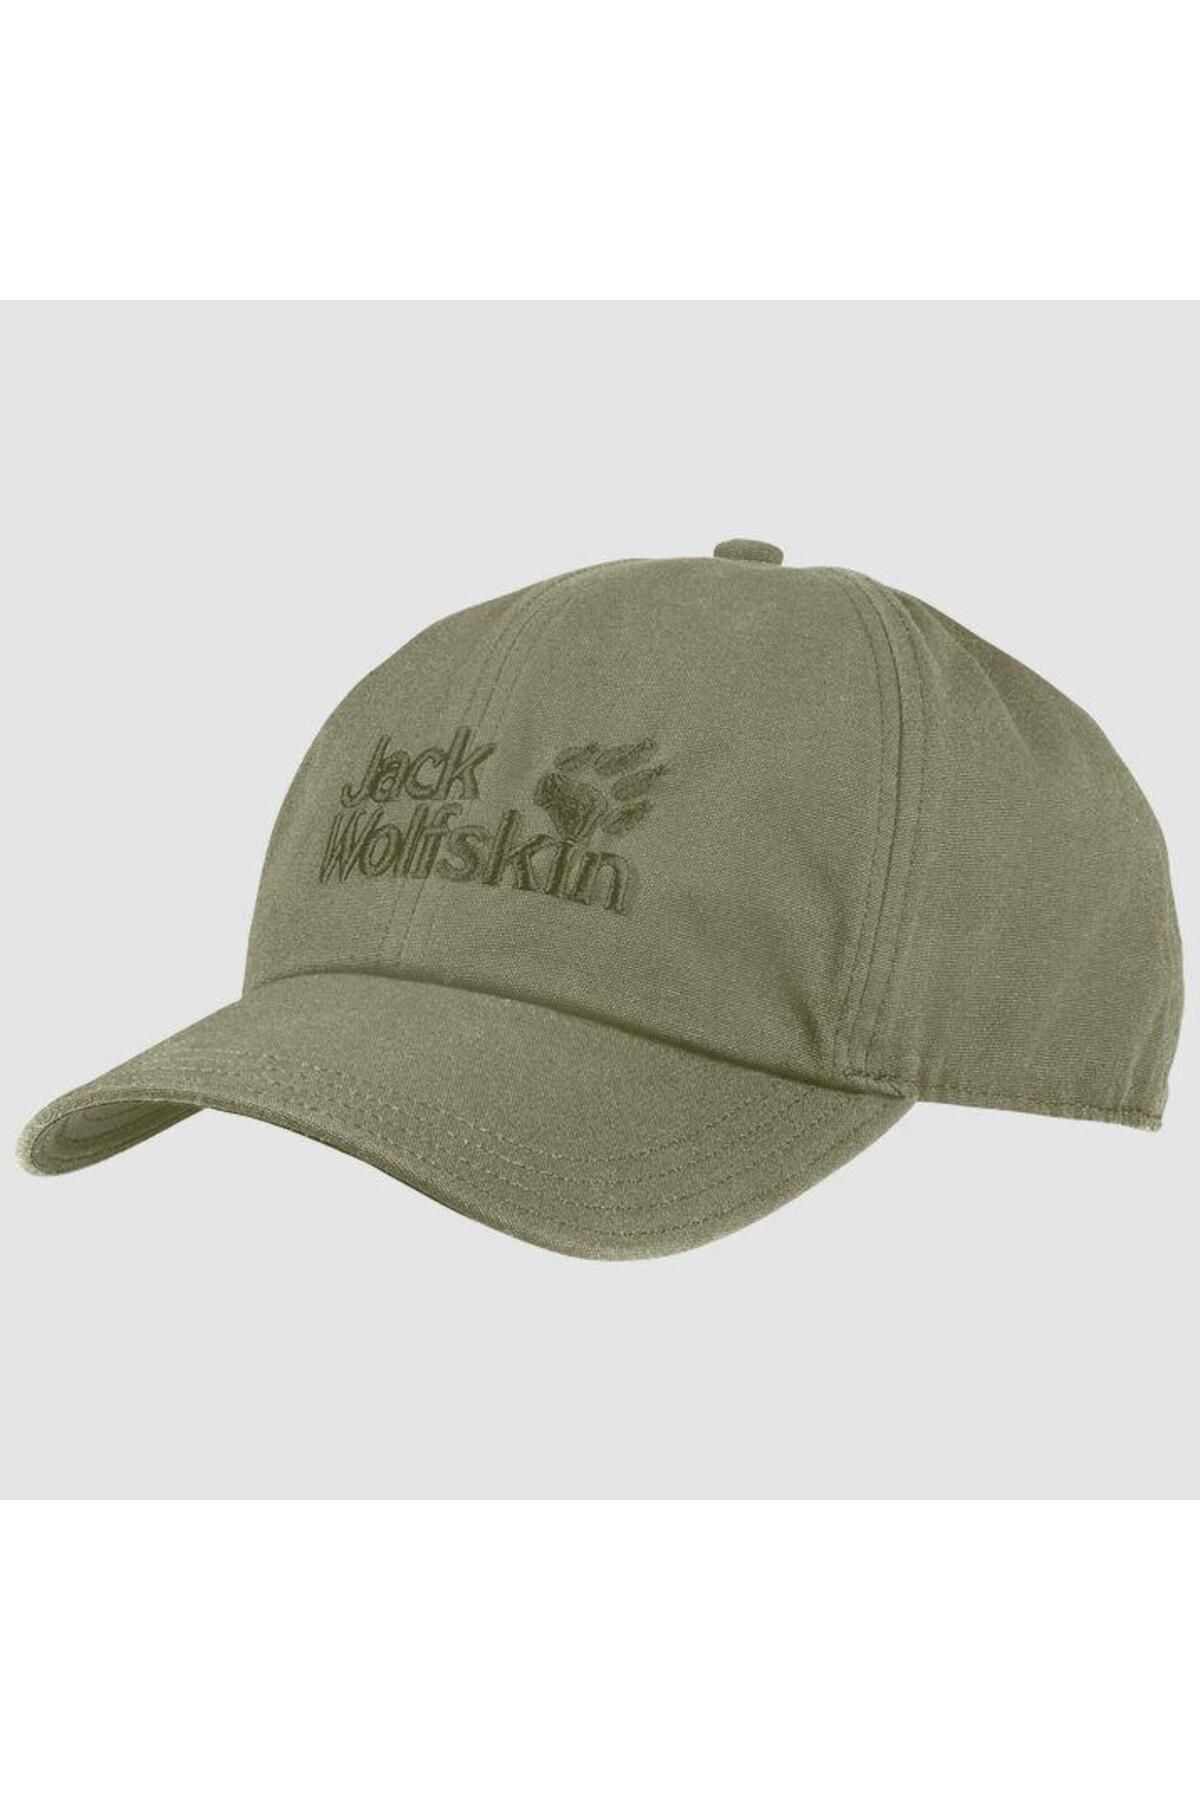 Jack Wolfskin Unisex Haki Baseball Cap Şapka 1900671-4288